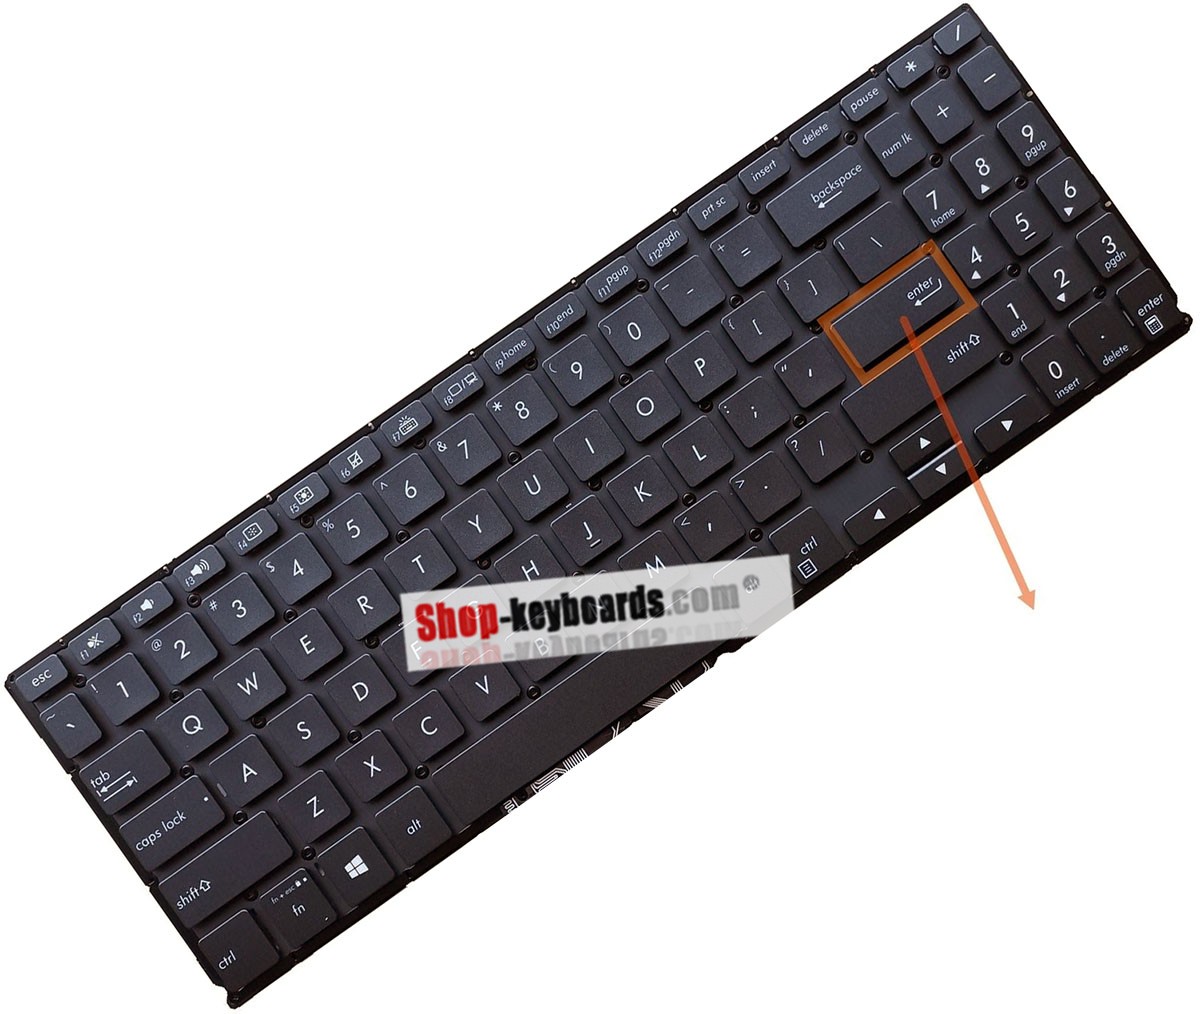 Asus 0KNB0-563JIT00 Keyboard replacement